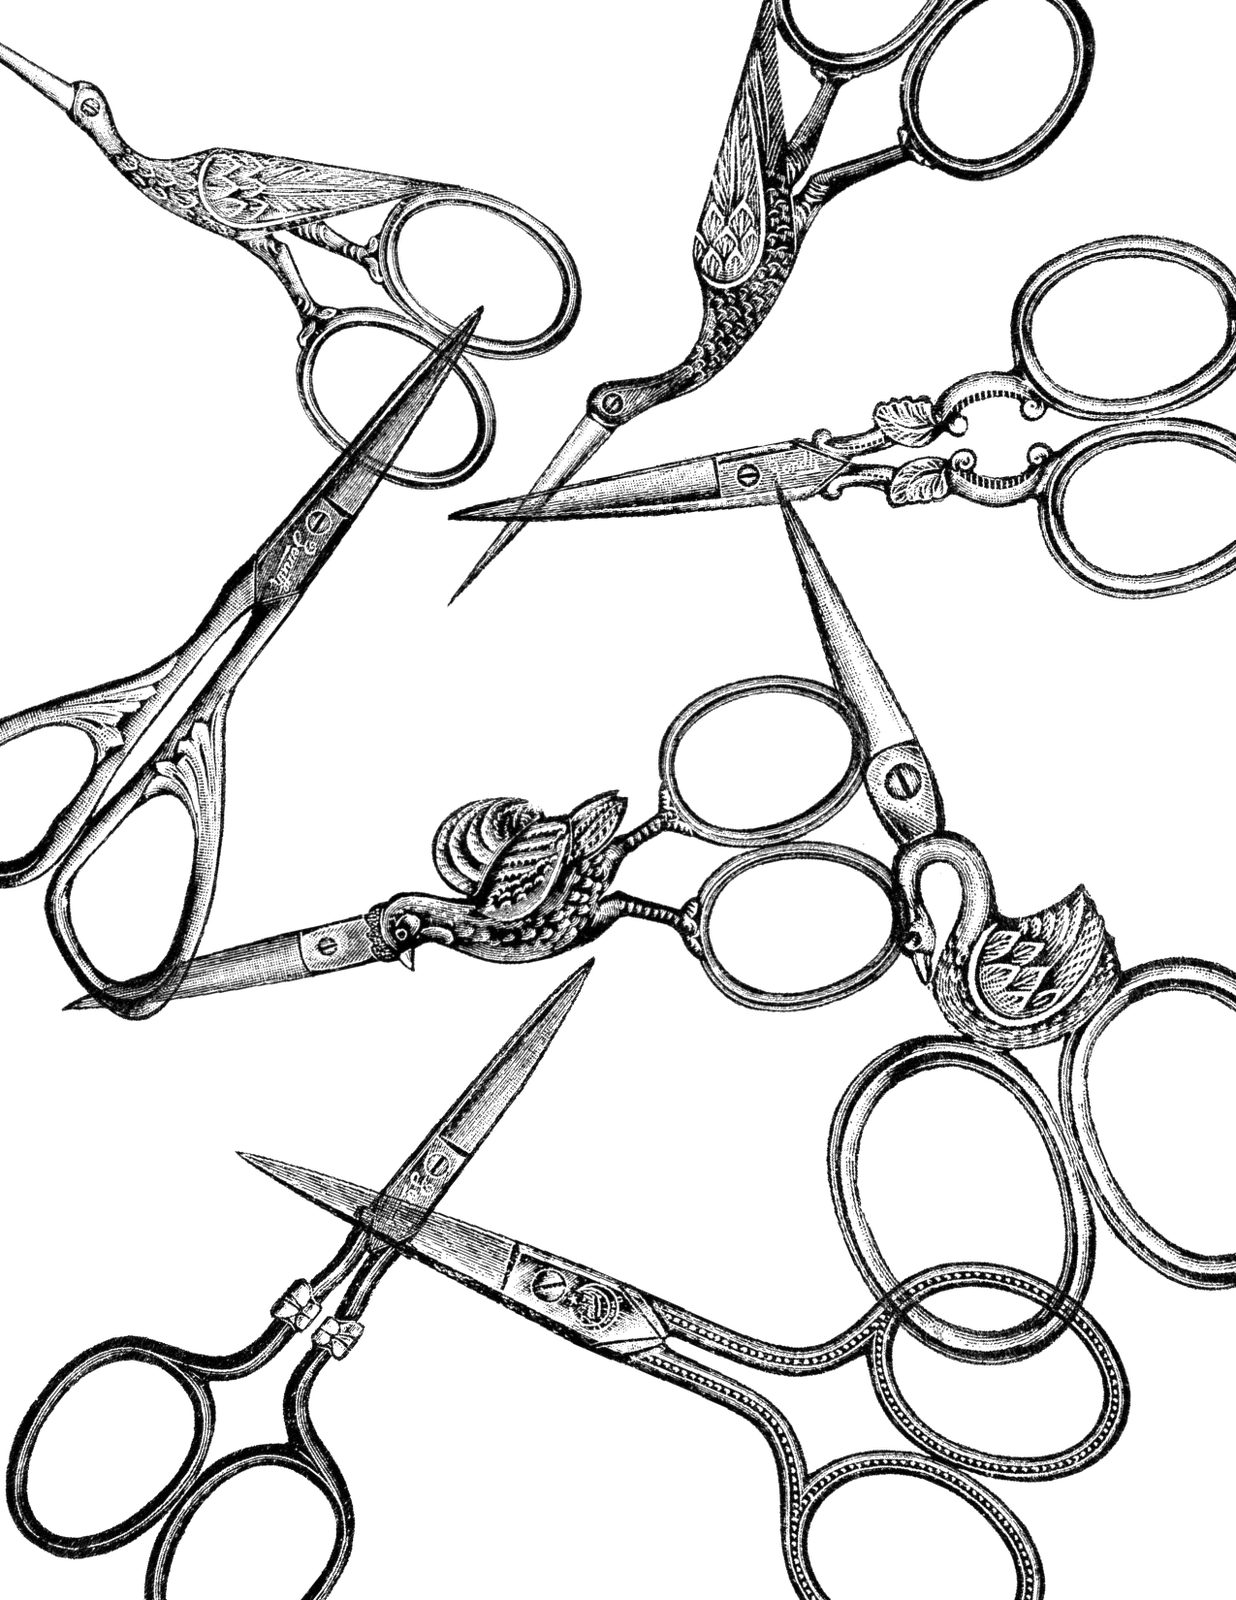 Download Vintage Scissors Clip Art HQ PNG Image.